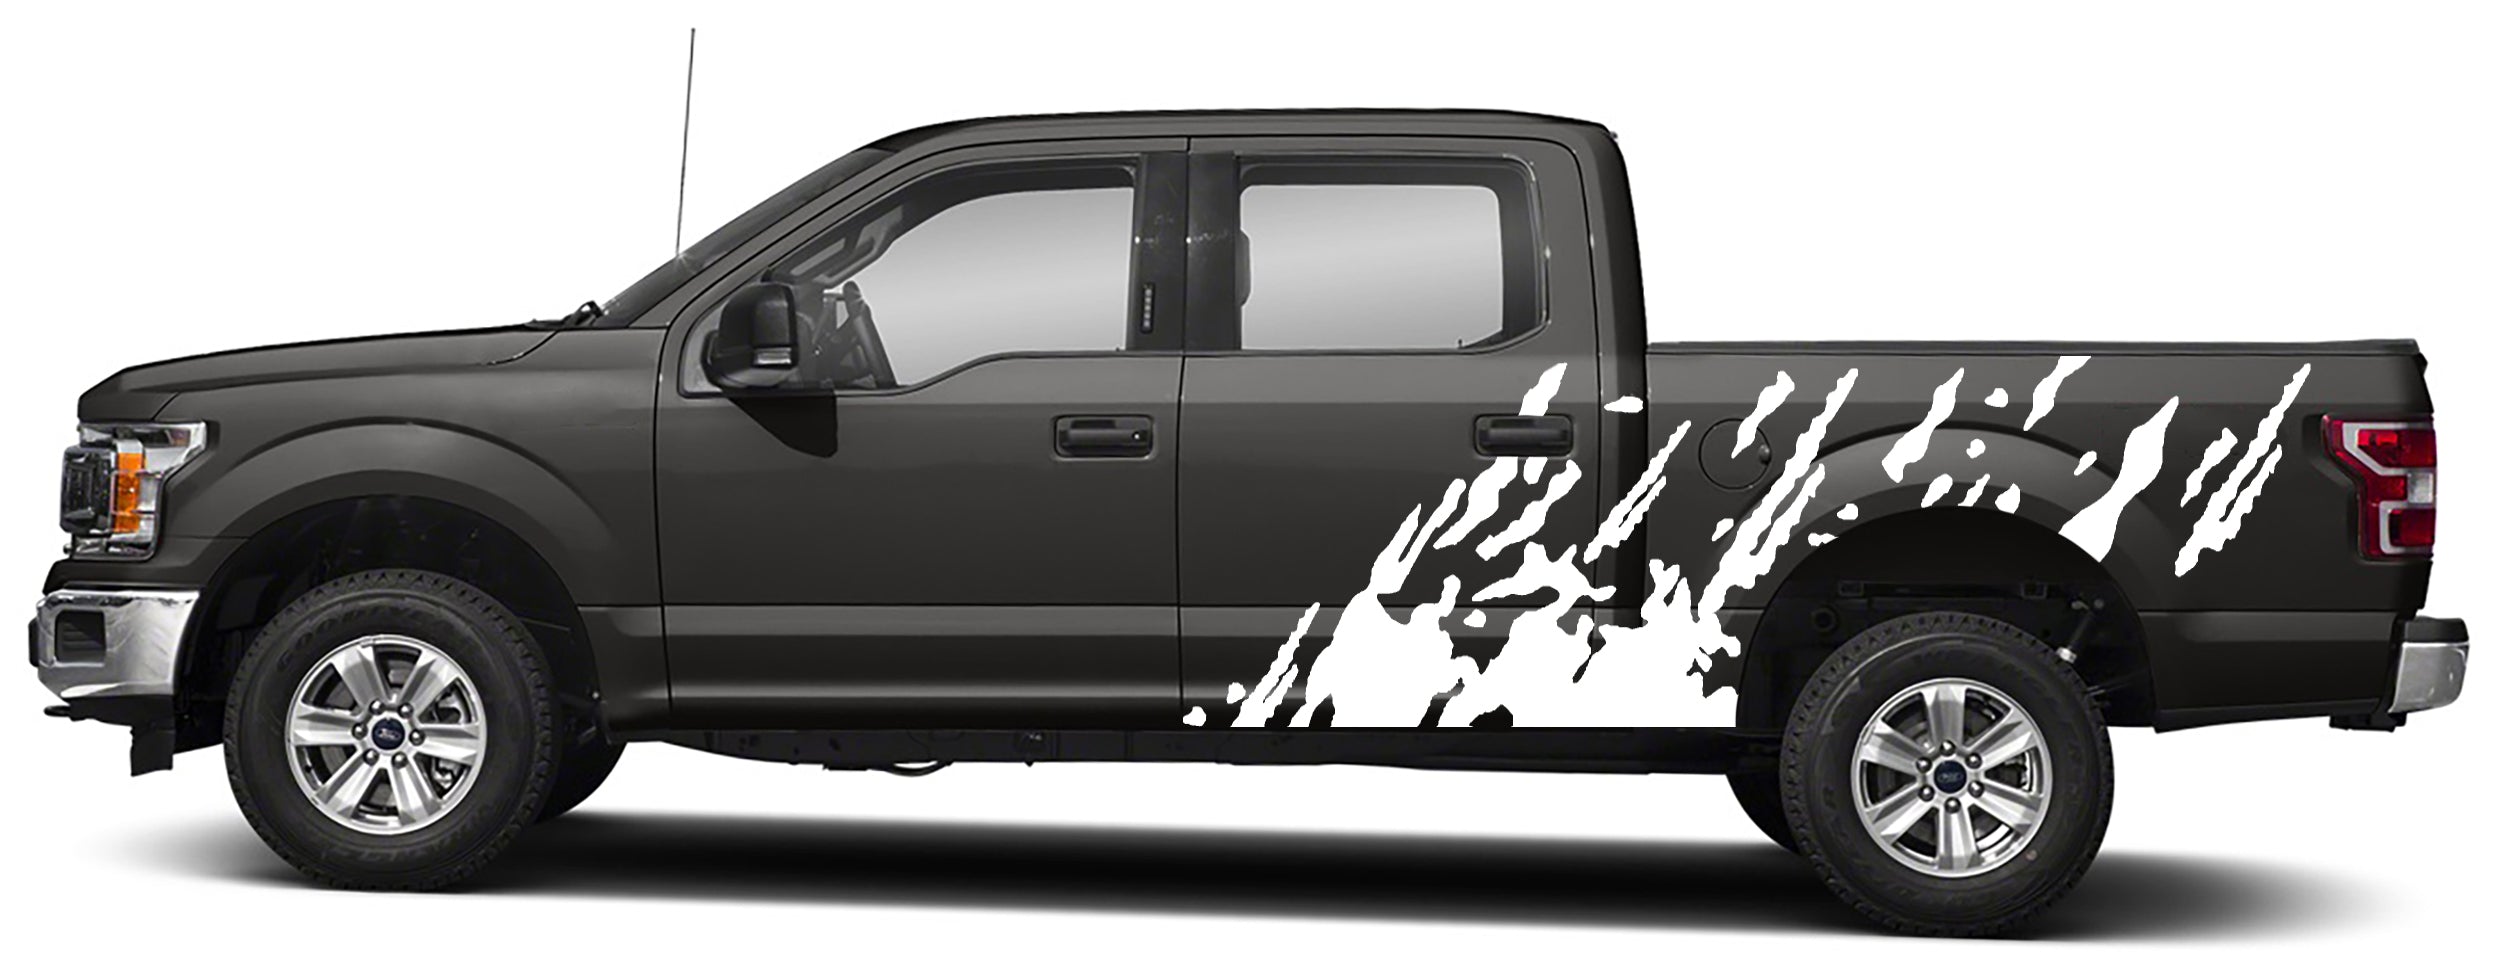 mud splash side graphics for ford f 150 2015 to 2020 models white